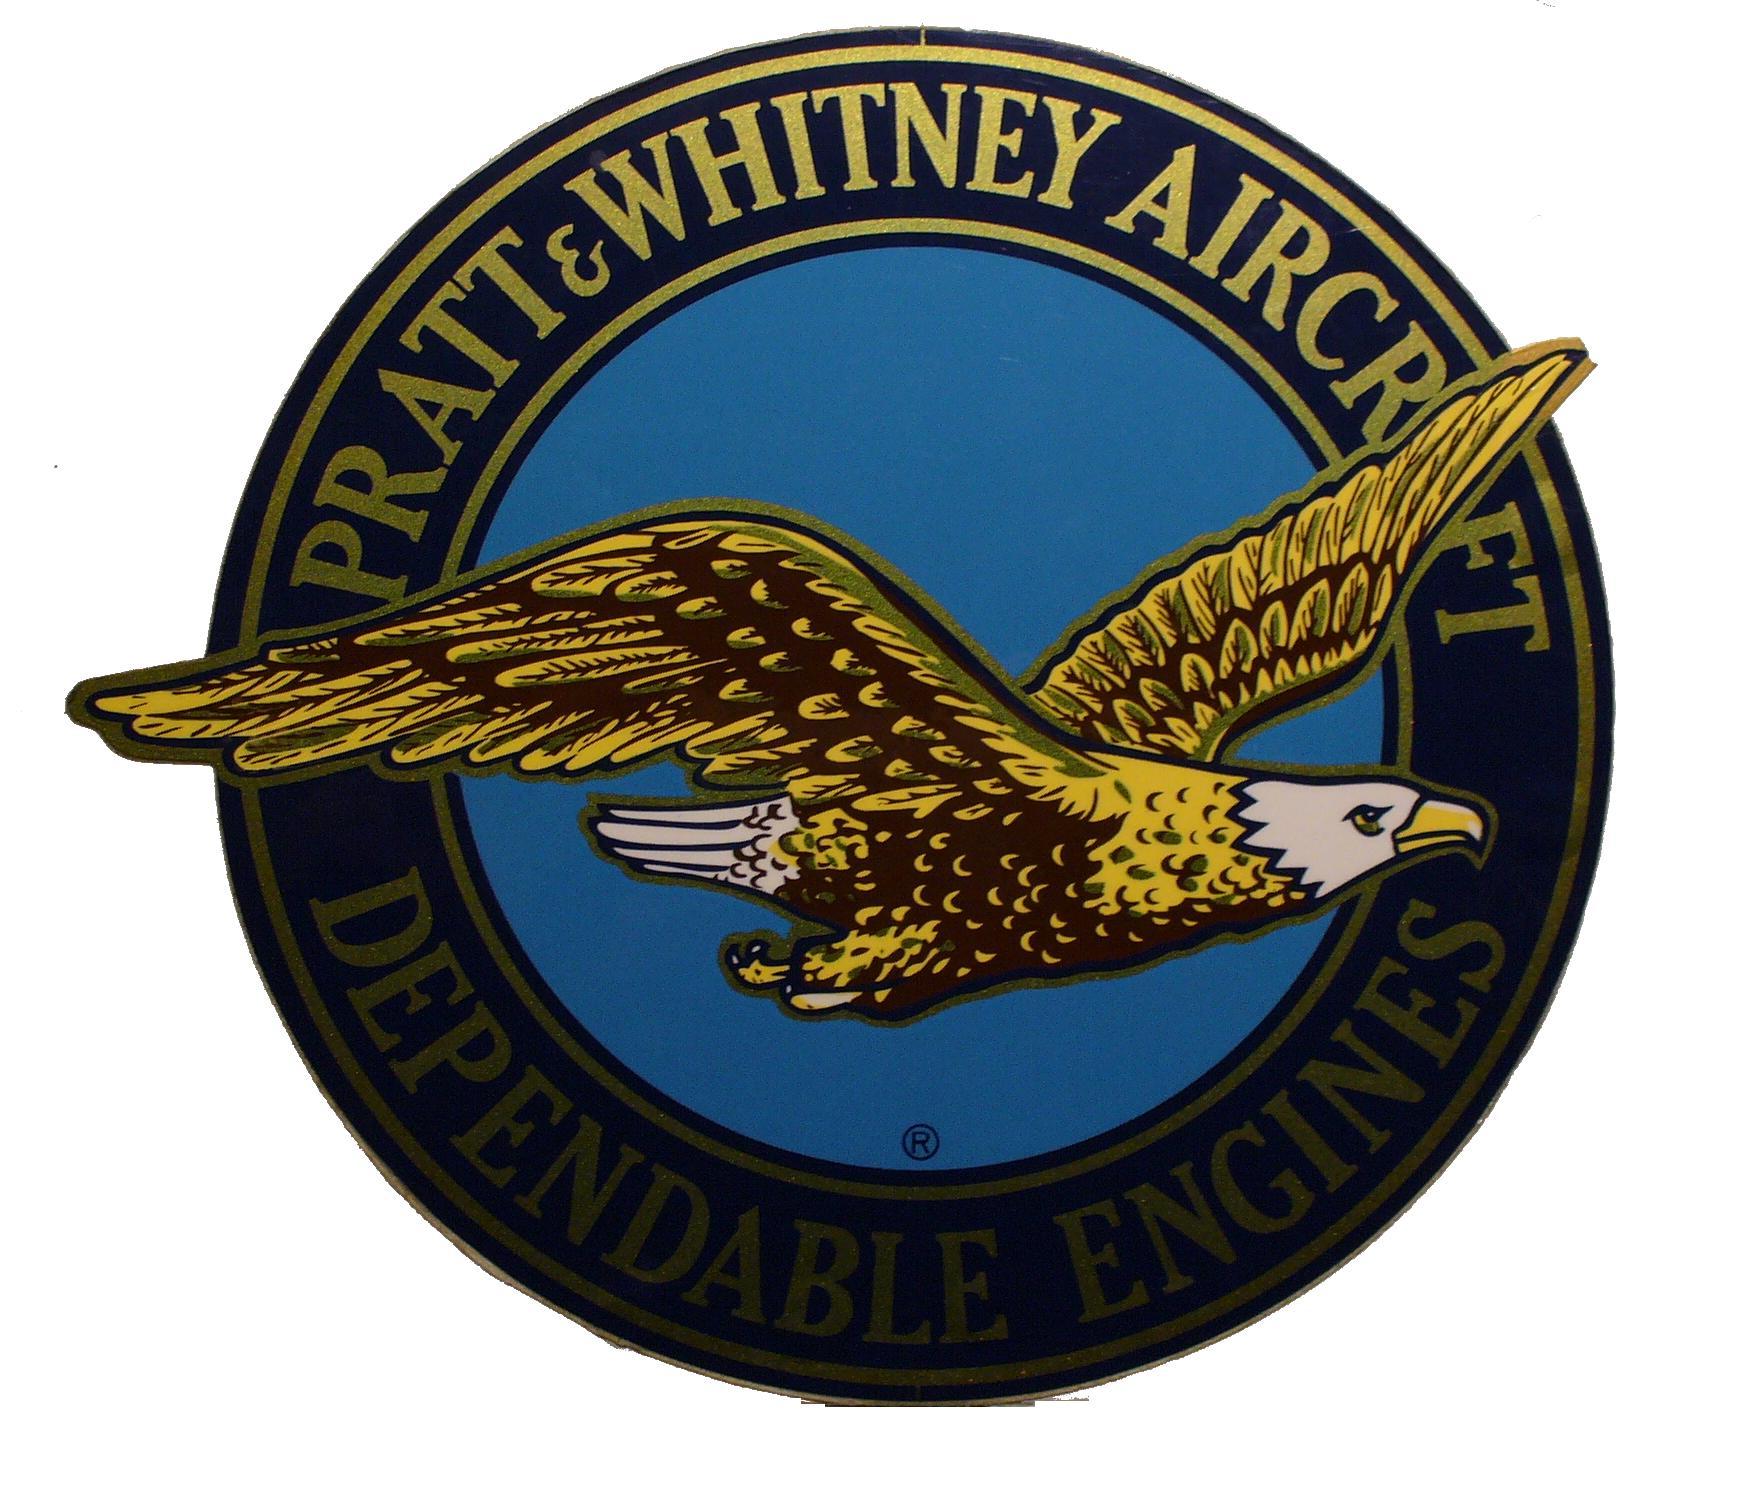 Pratt and Whitney Logo - File:Pratt whitney.jpg - Wikimedia Commons